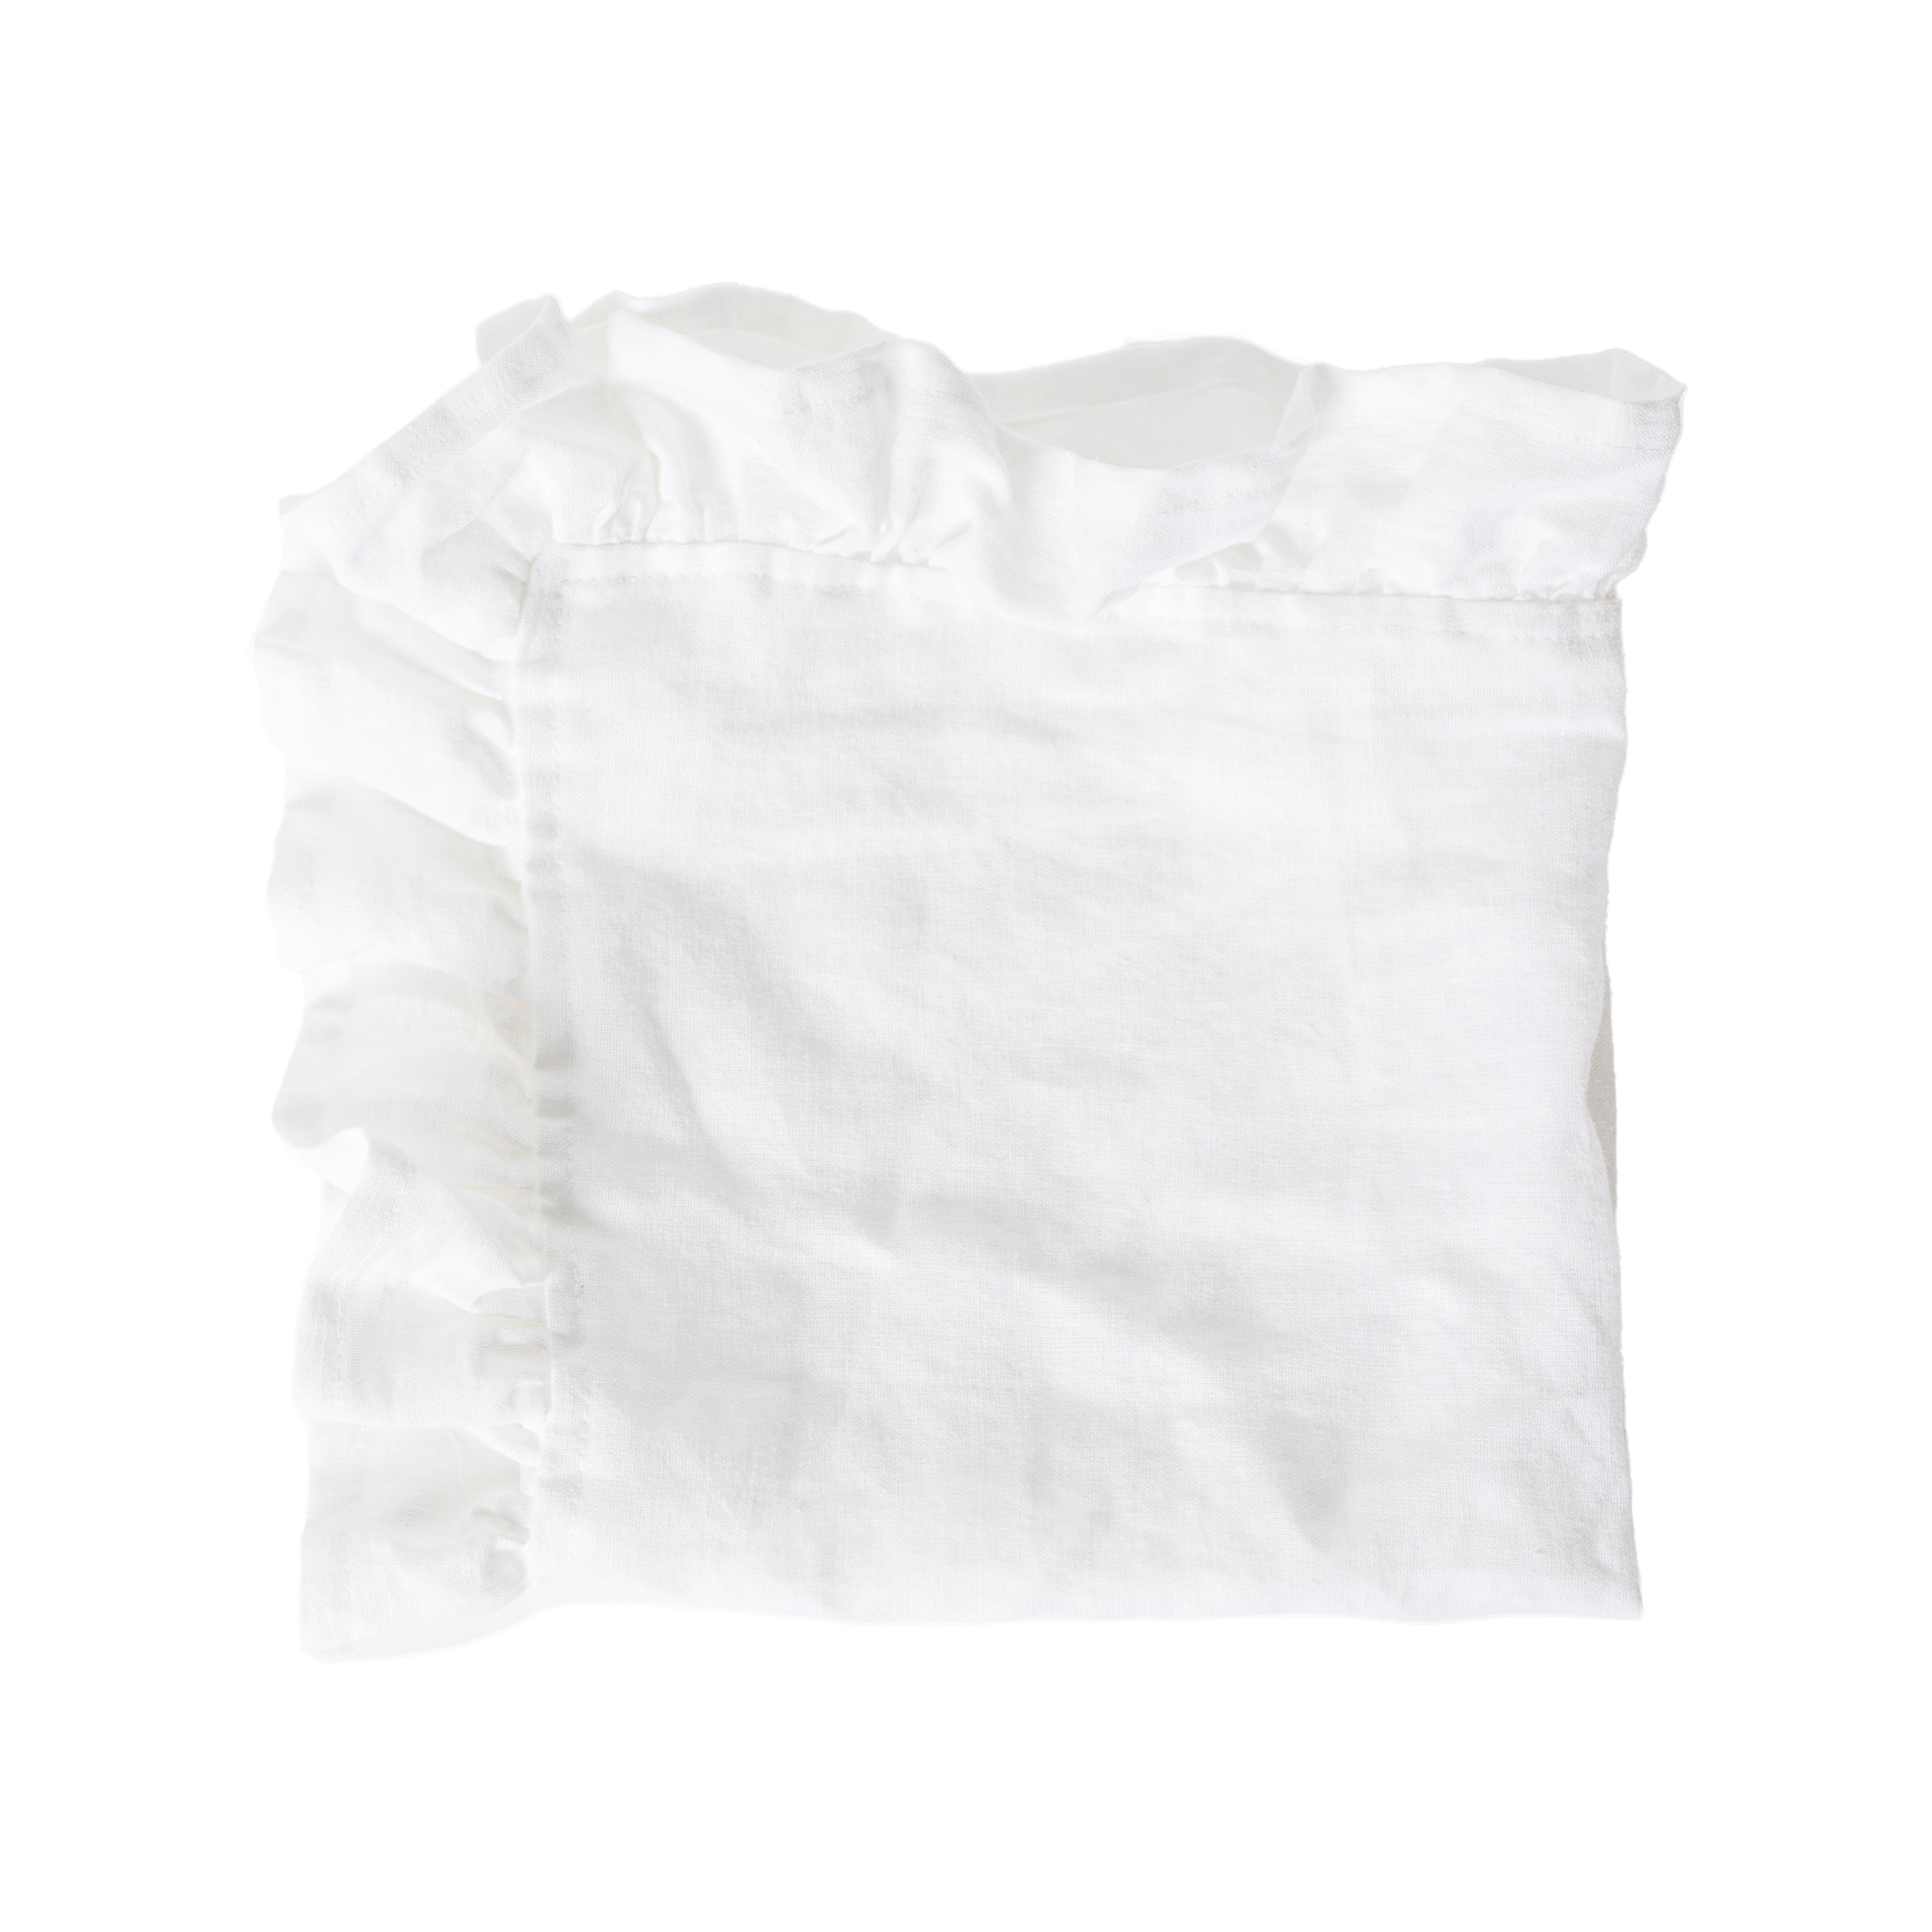 Ruffled White French Linen Napkin